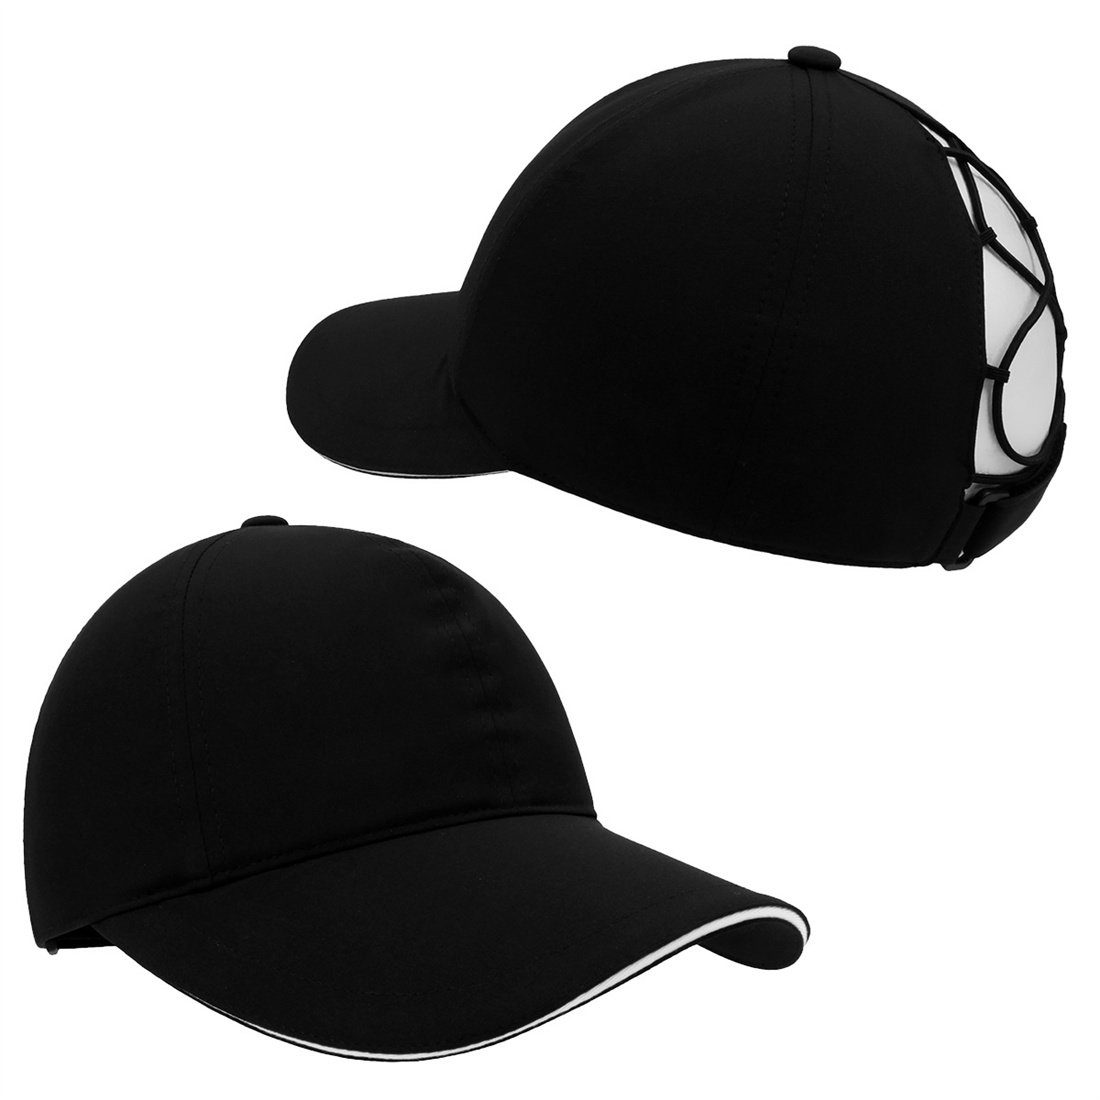 DÖRÖY Outdoor-Baseballkappe Kappe,Sonnenblende trocknende Schwarz Cap Frauen,schnell für Baseball